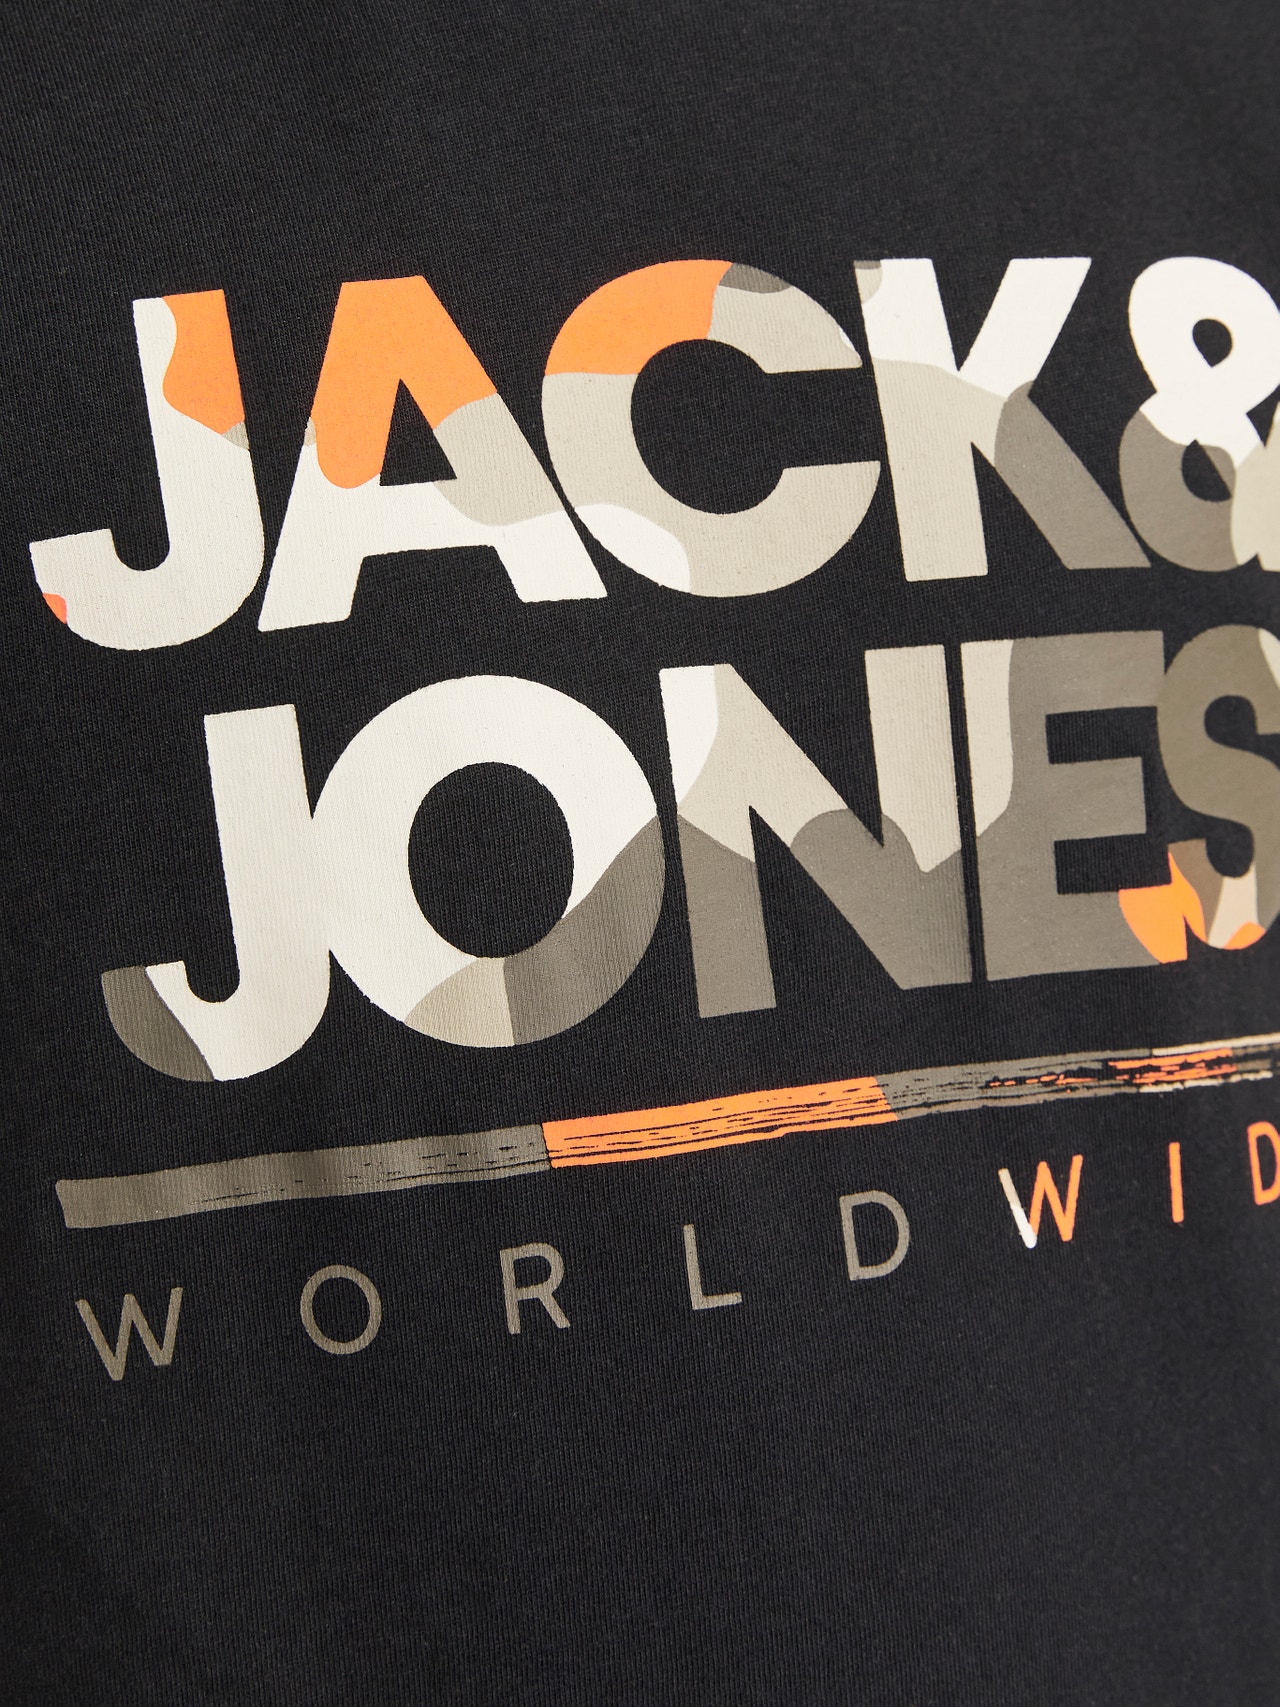 Jack & Jones Logo Tričko Junior -Black - 12259476